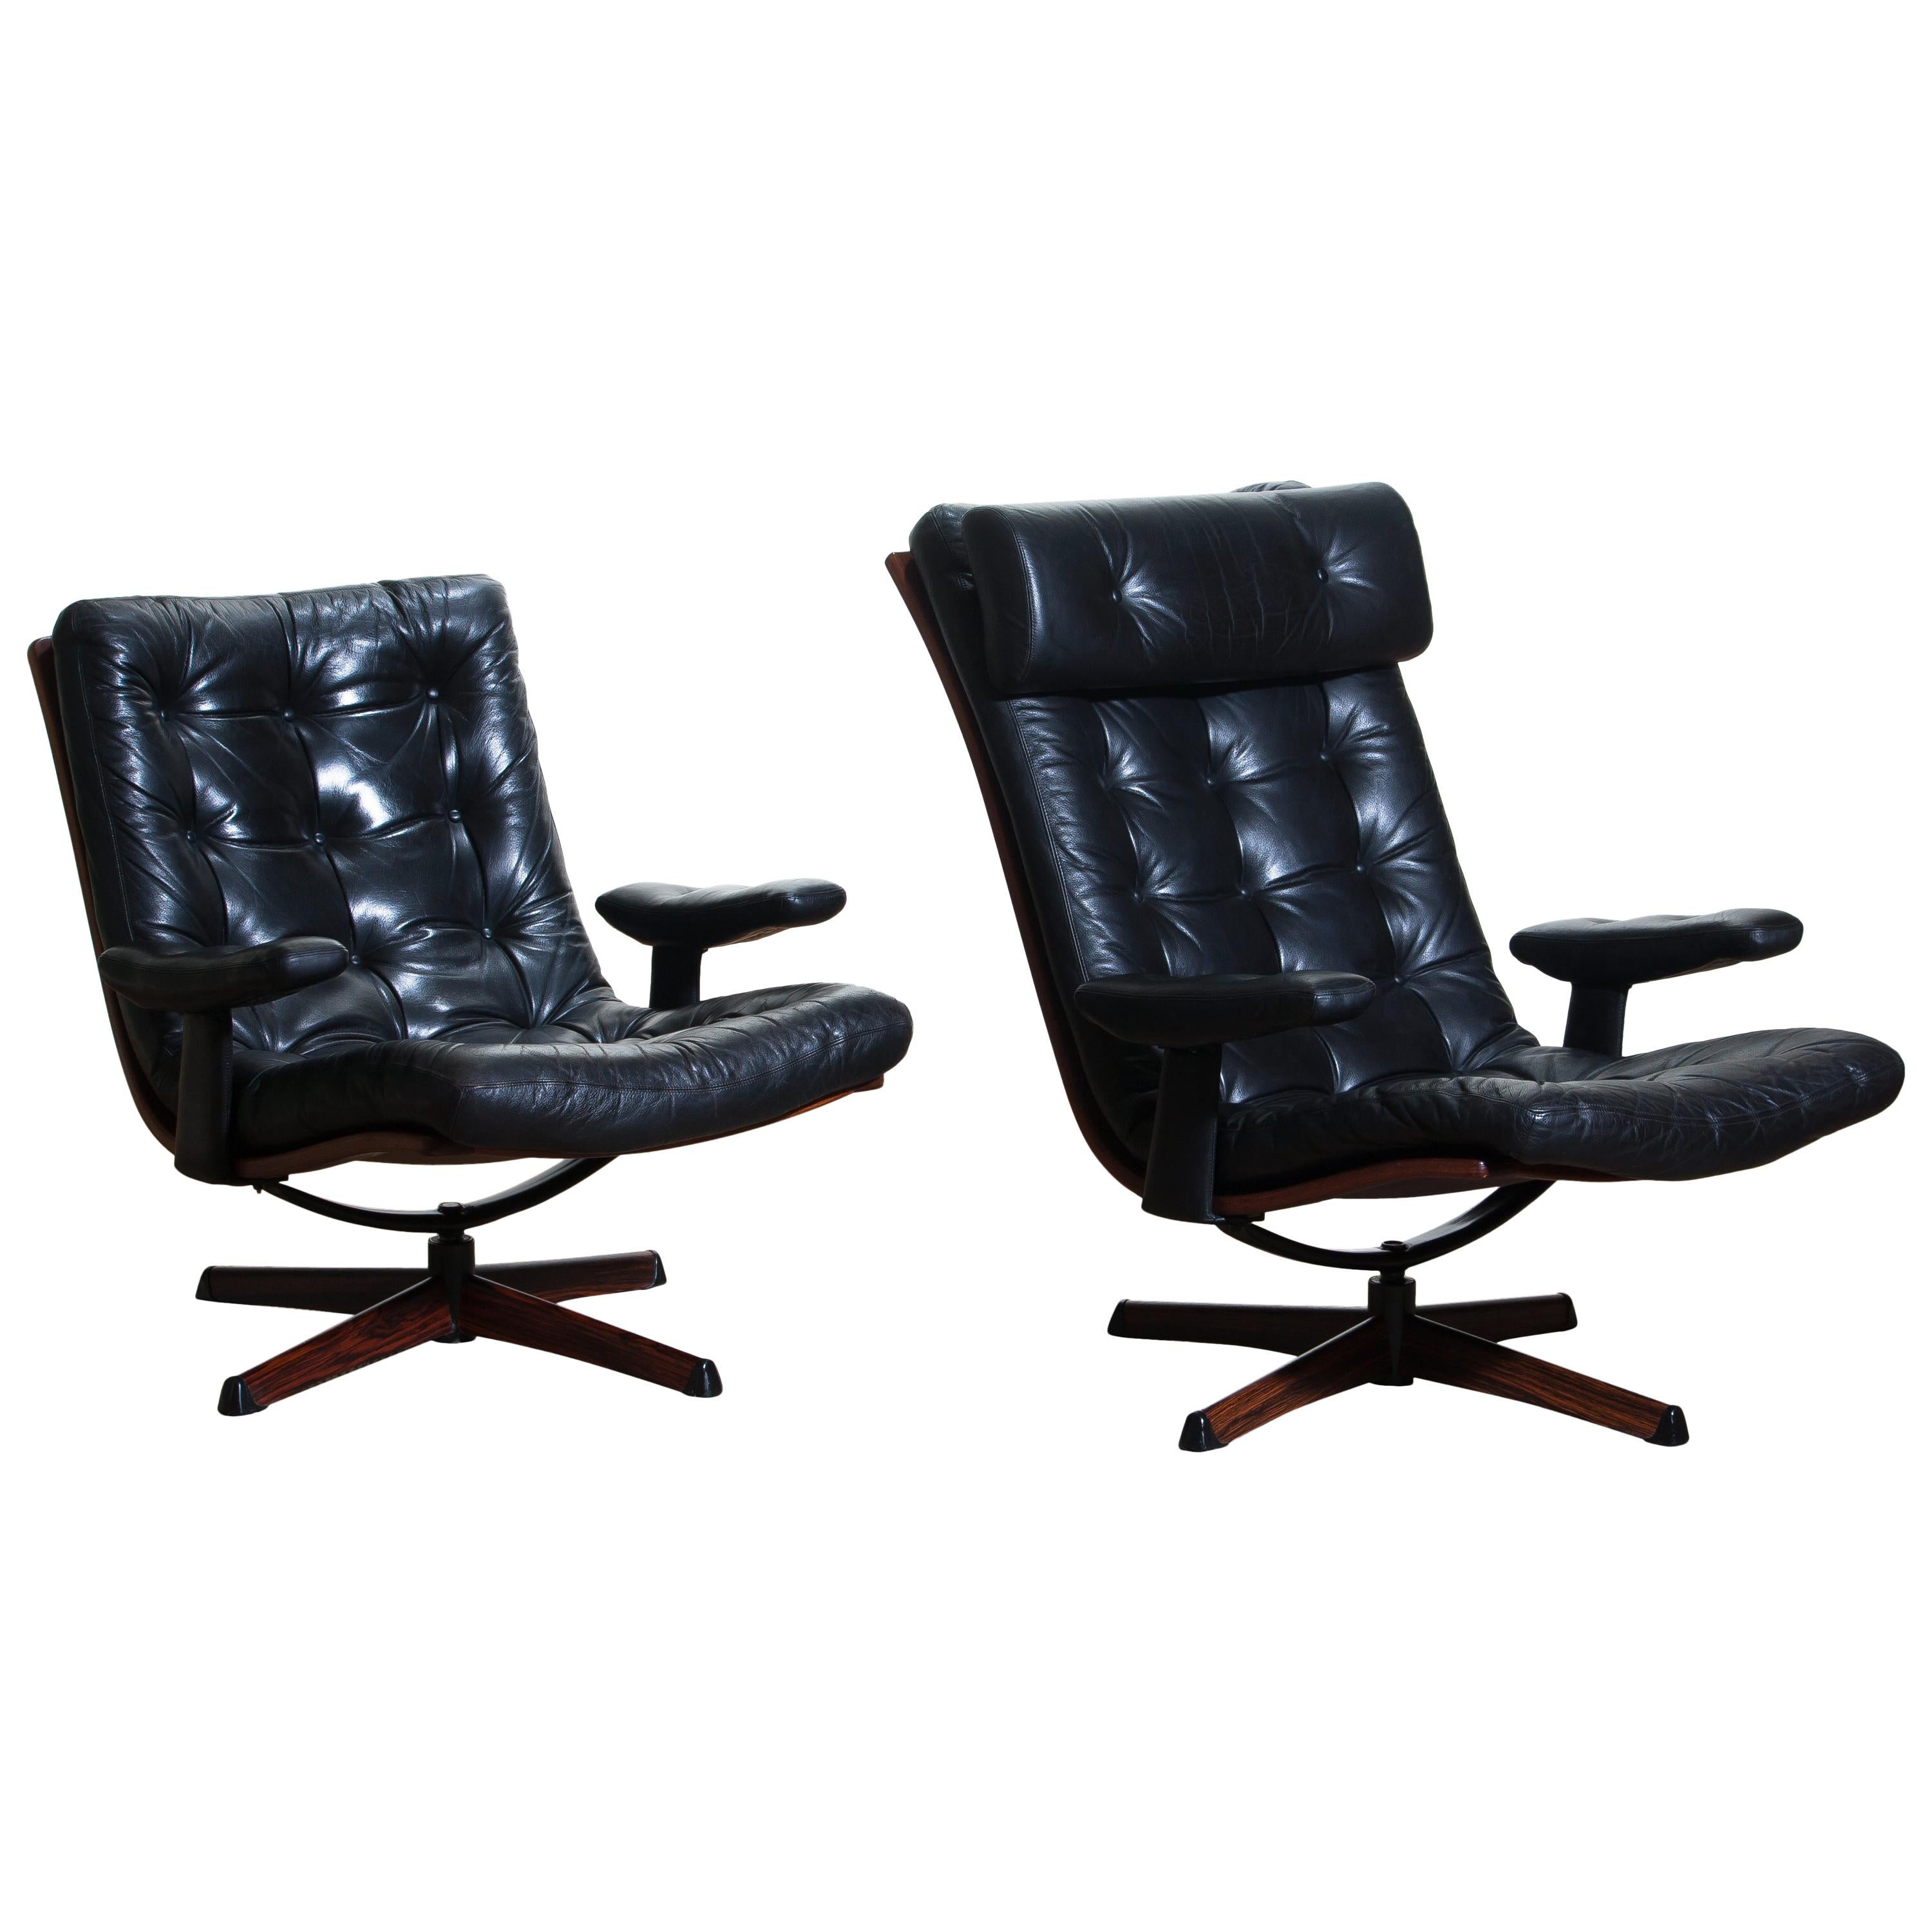 1960s Matching Pair of Black Leather Swivel Chairs by Göte Möbler Nässjö, Sweden 1